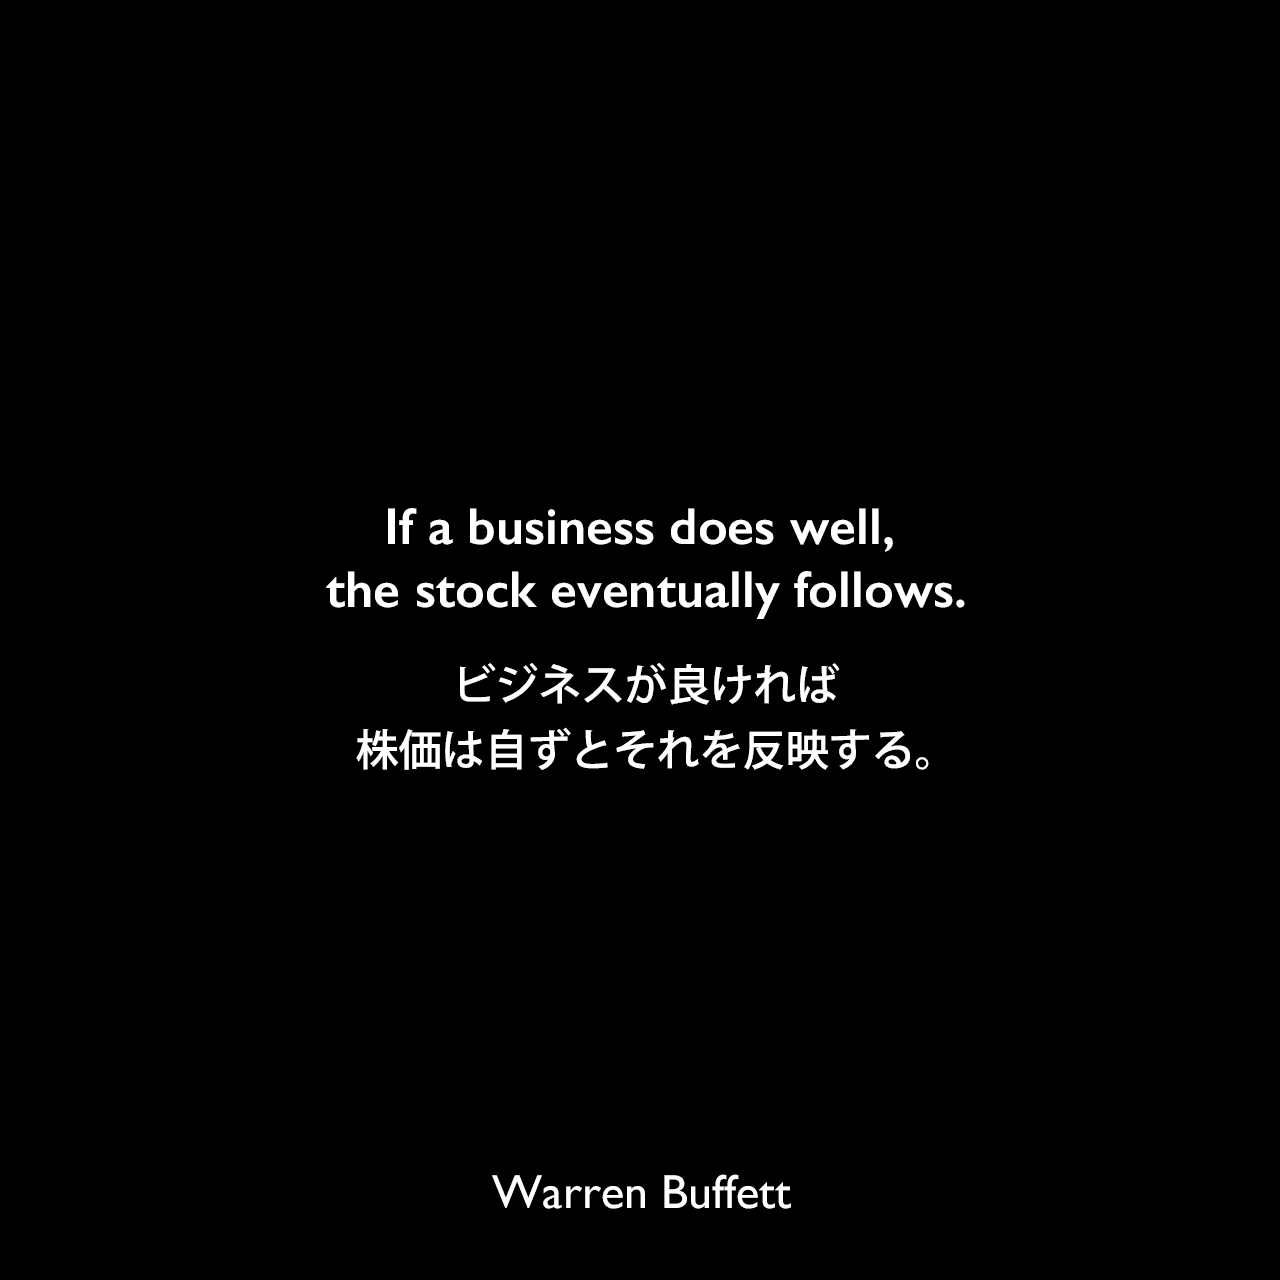 If a business does well, the stock eventually follows.ビジネスが良ければ株価は自ずとそれを反映する。Warren Buffett